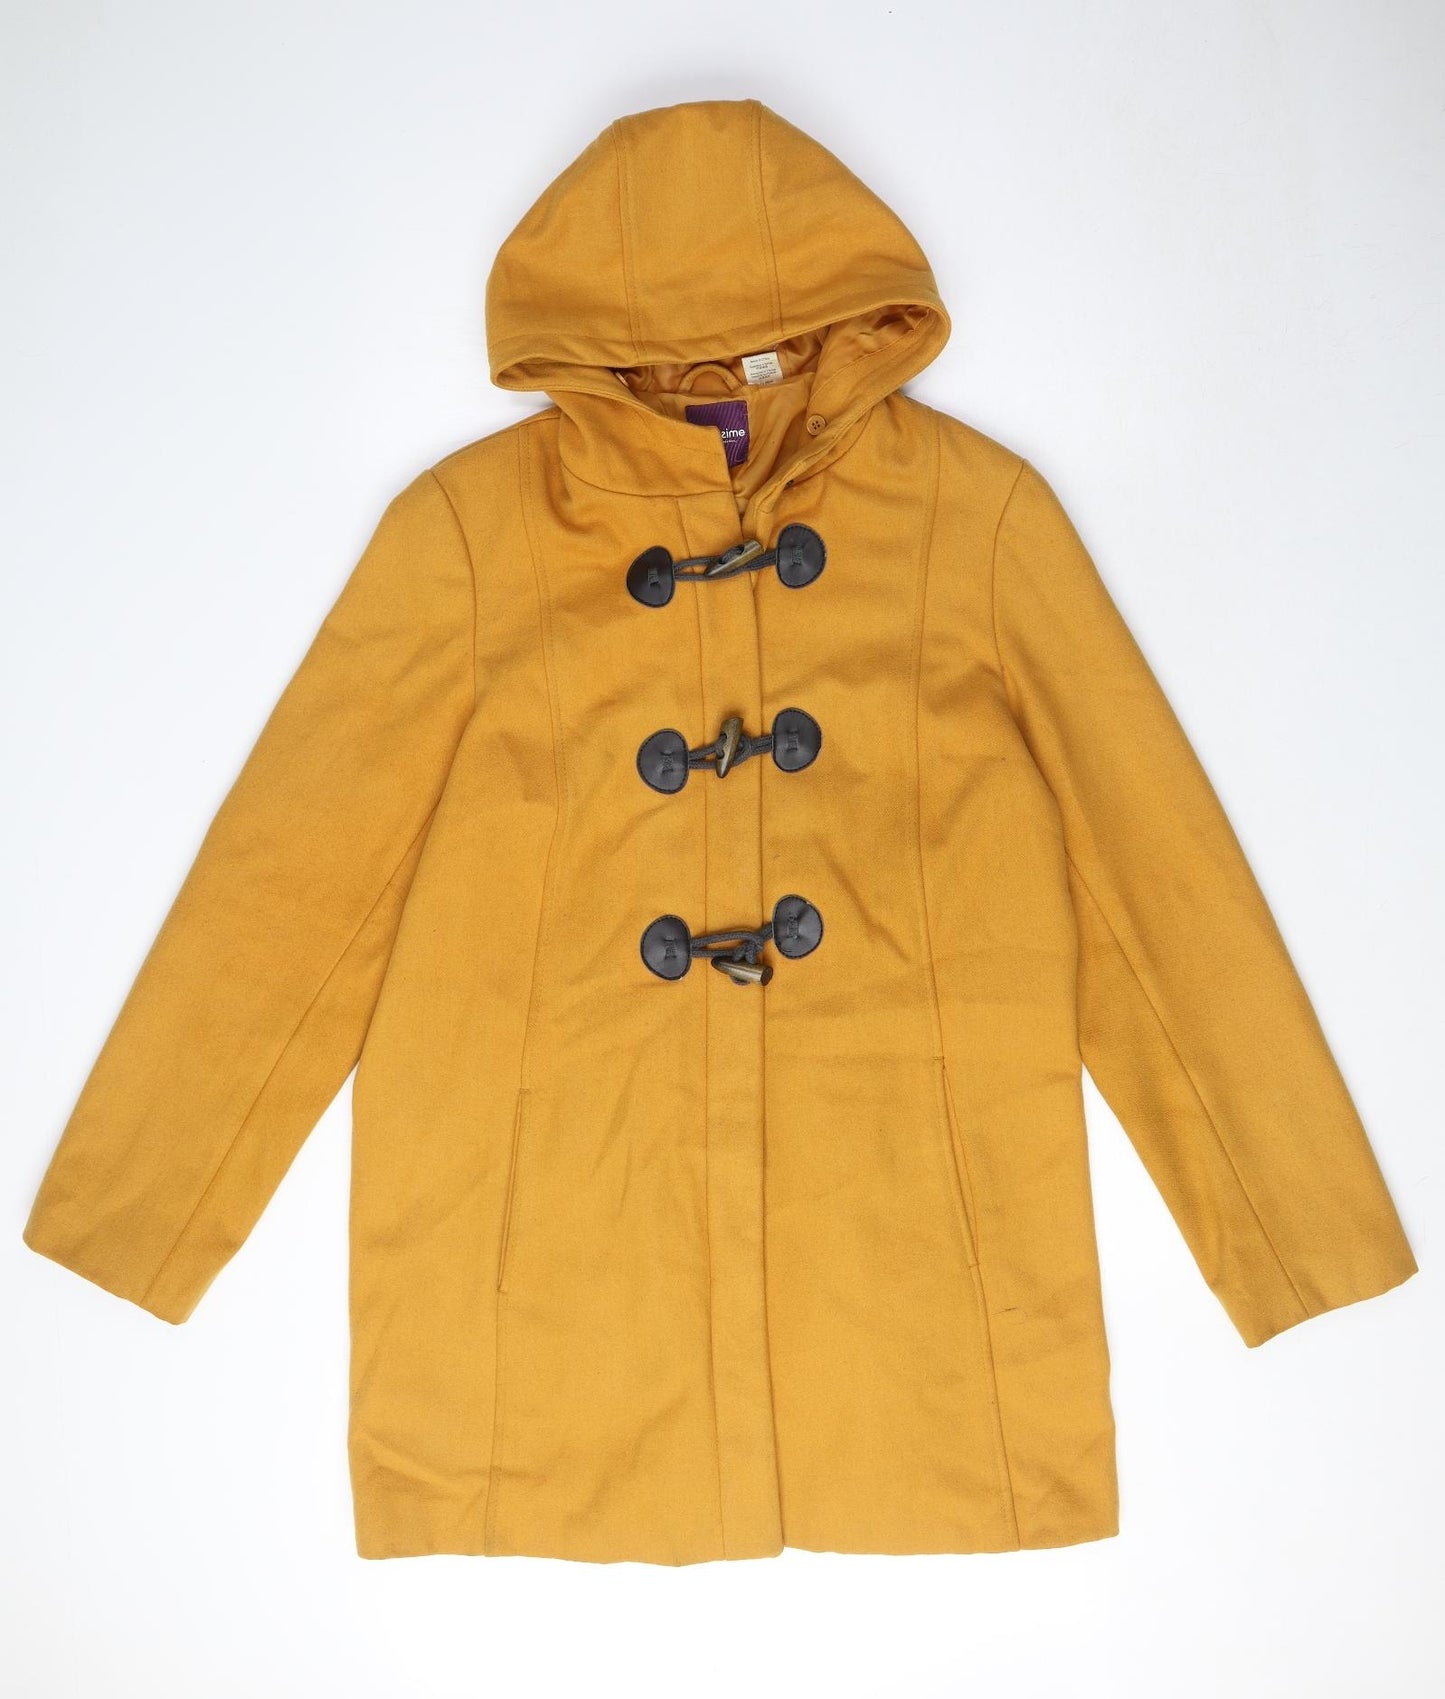 Taillissime Womens Yellow Rain Coat Coat Size 18 Snap